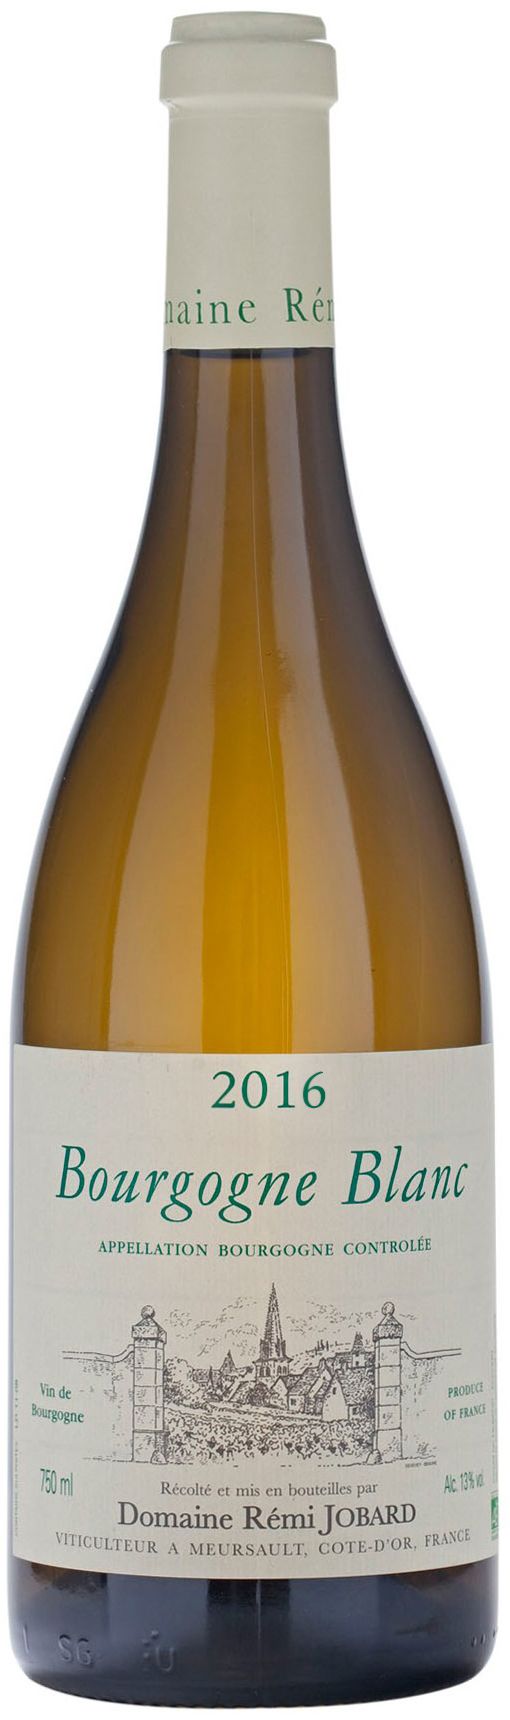 Domaine Remi Jobard, Bourgogne Blanc, 2016